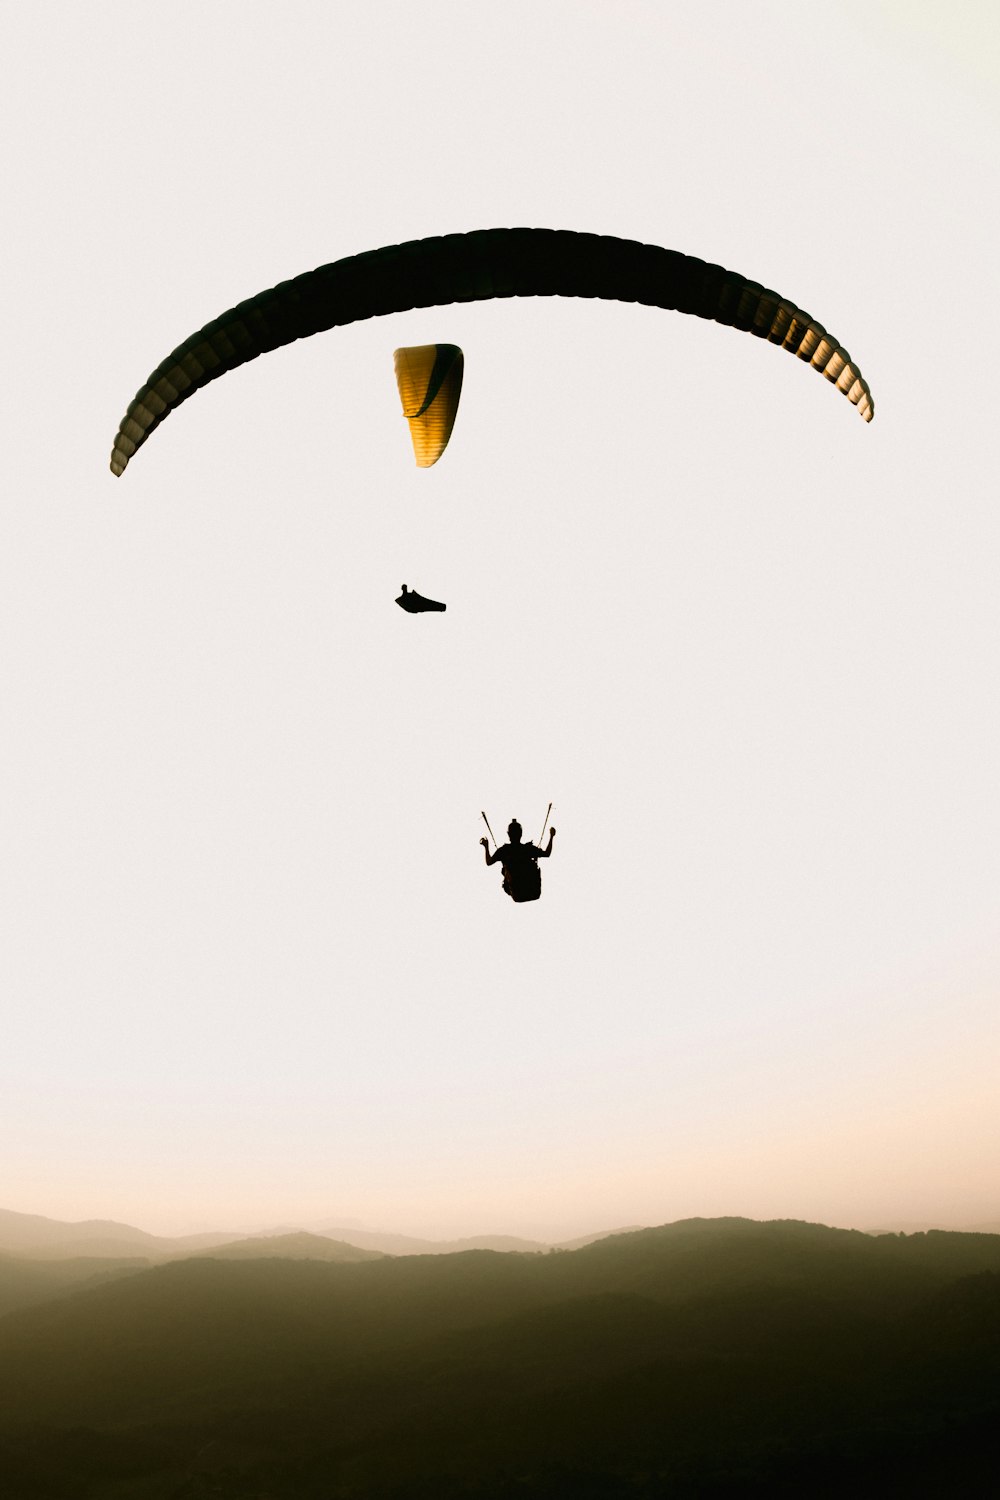 Siluetta del paracadute di guida di 2 persone